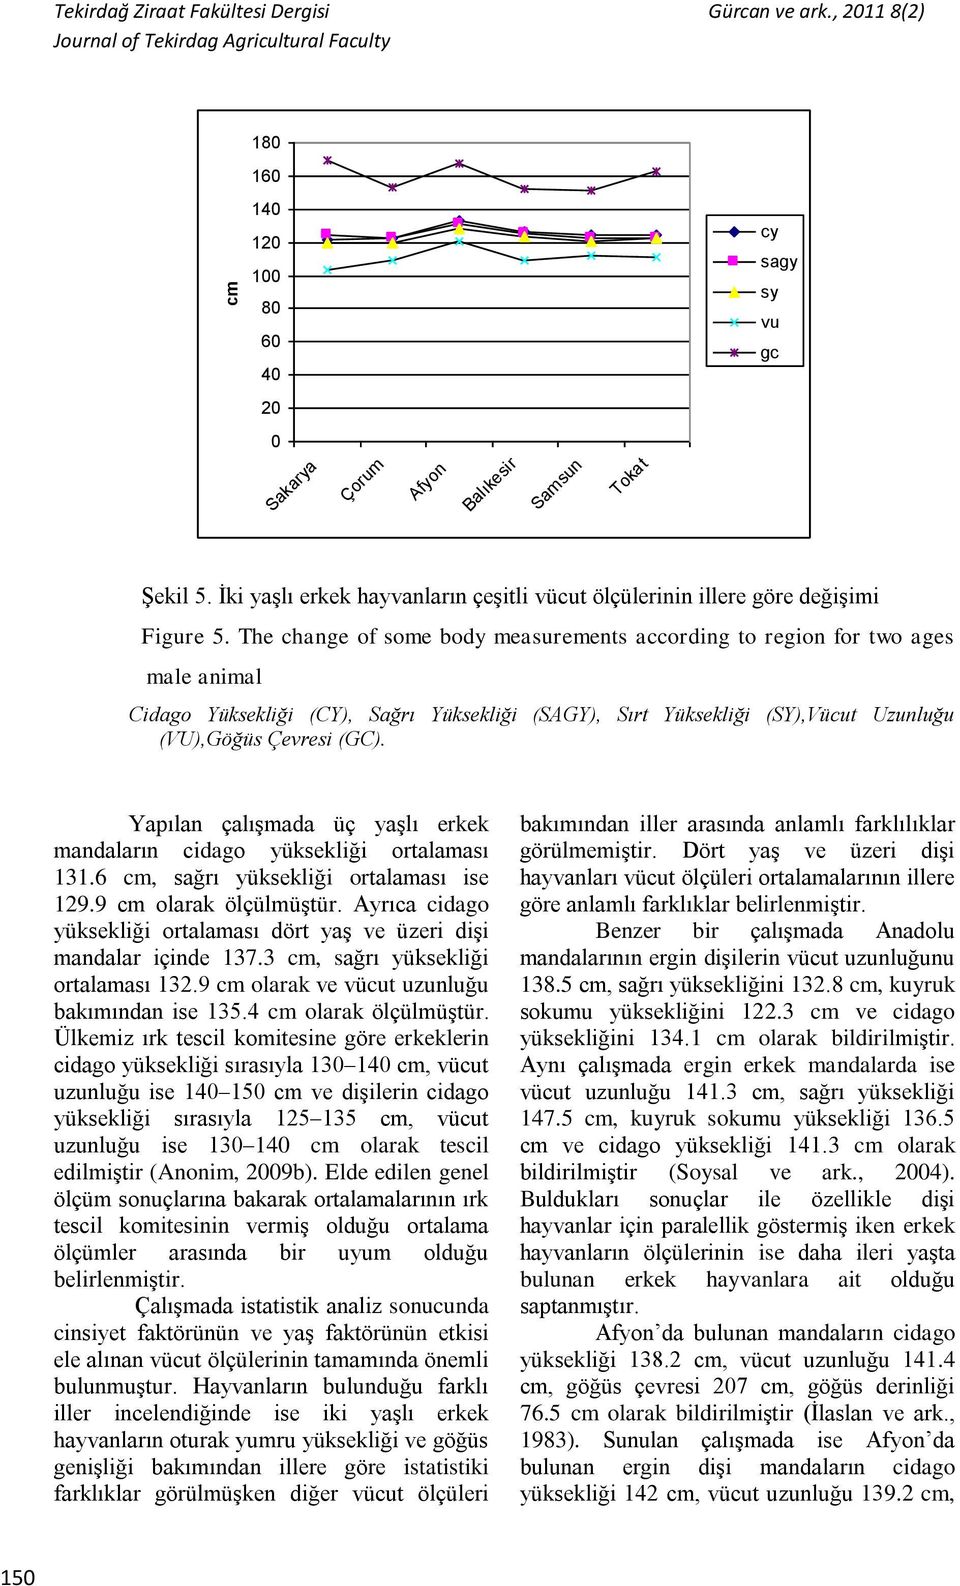 The change of some body measurements according to region for two ages male animal Cidago Yüksekliği (CY), Sağrı Yüksekliği (SAGY), Sırt Yüksekliği (SY),Vücut Uzunluğu (VU),Göğüs Çevresi (GC).